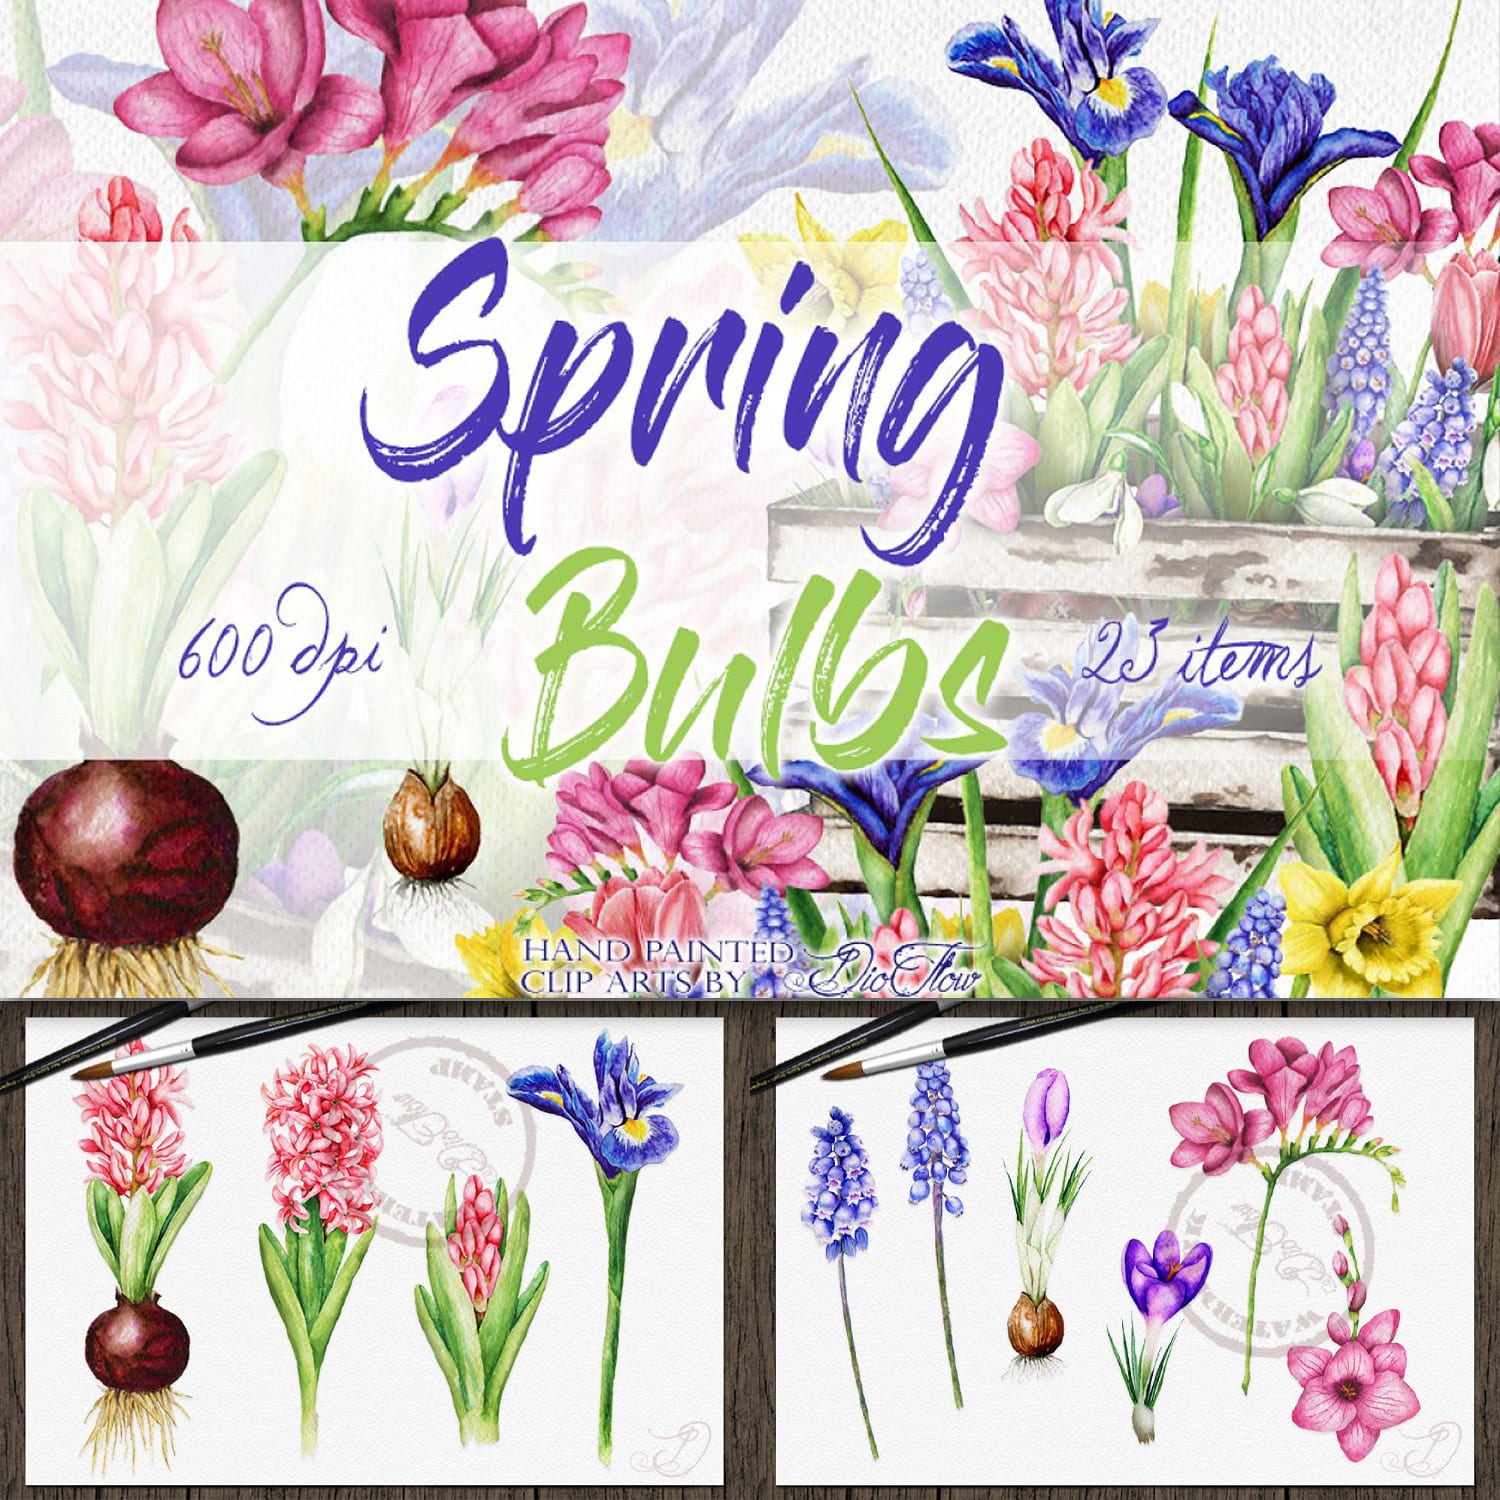 Spring Bulbs Illustration cover.